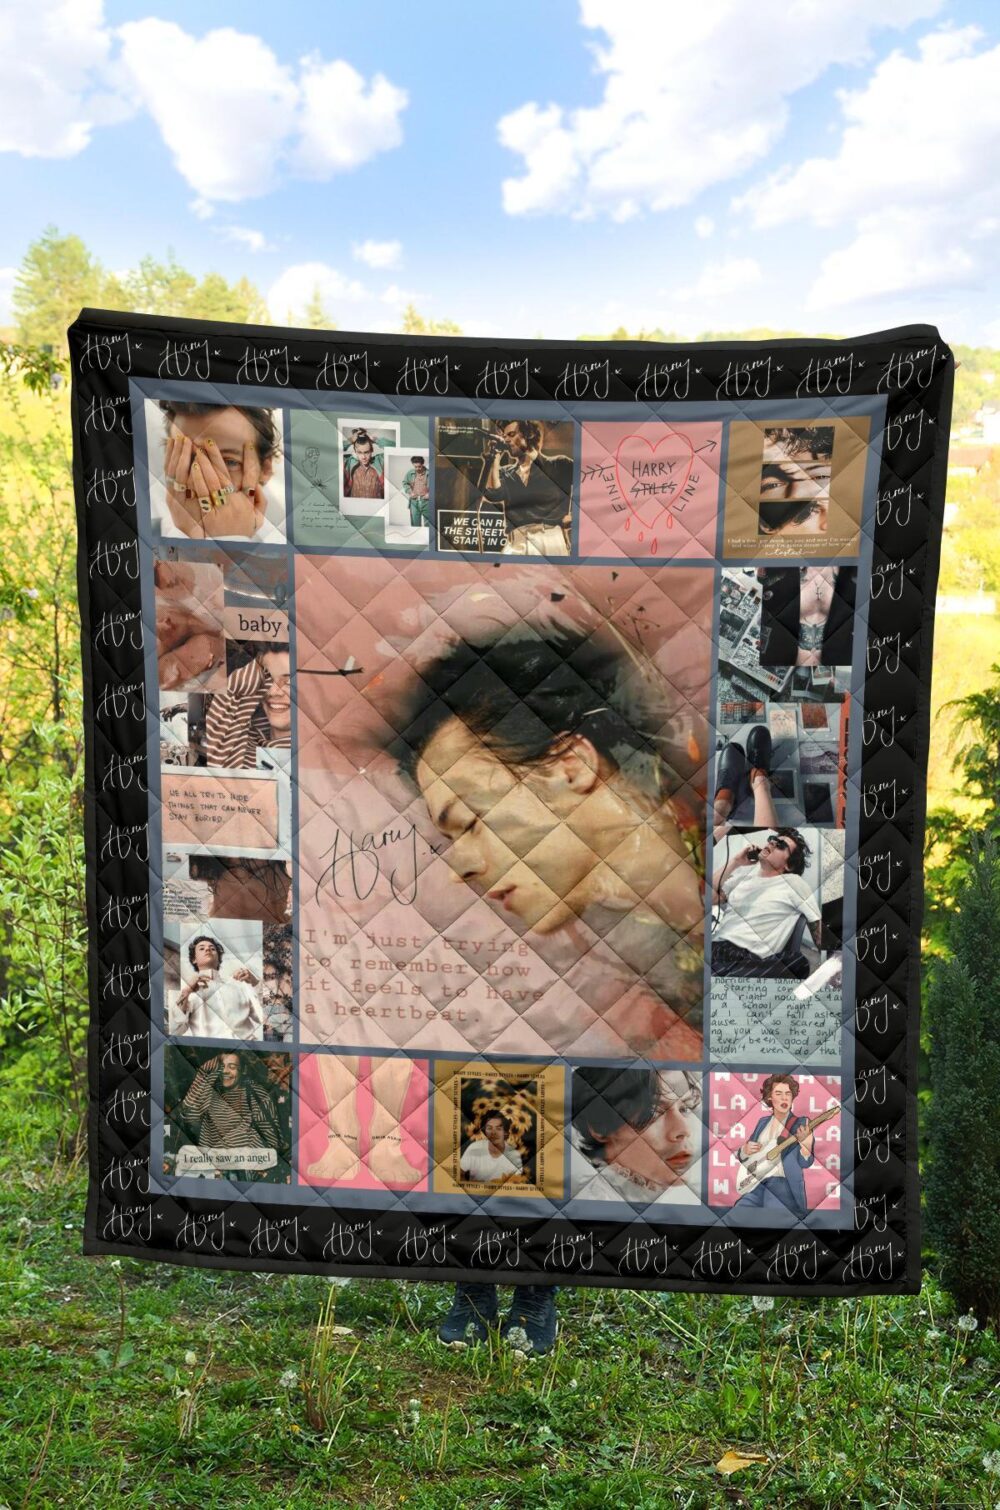 Harry Styles Quilt Blanket Gift Idea For Music Fan